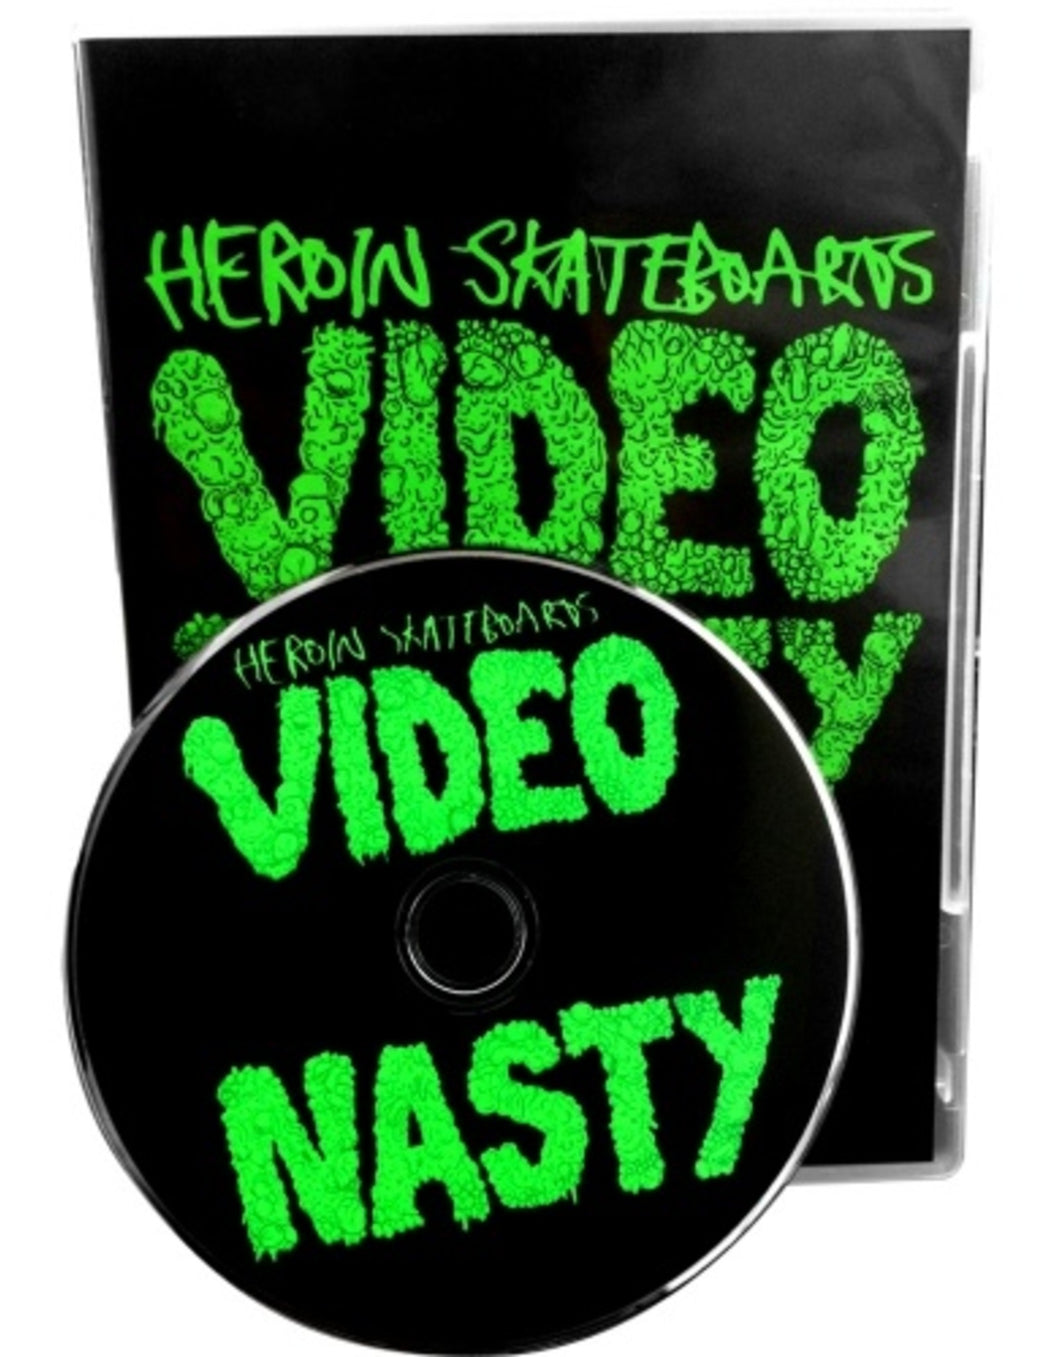 Heroin Video Nasty DVD